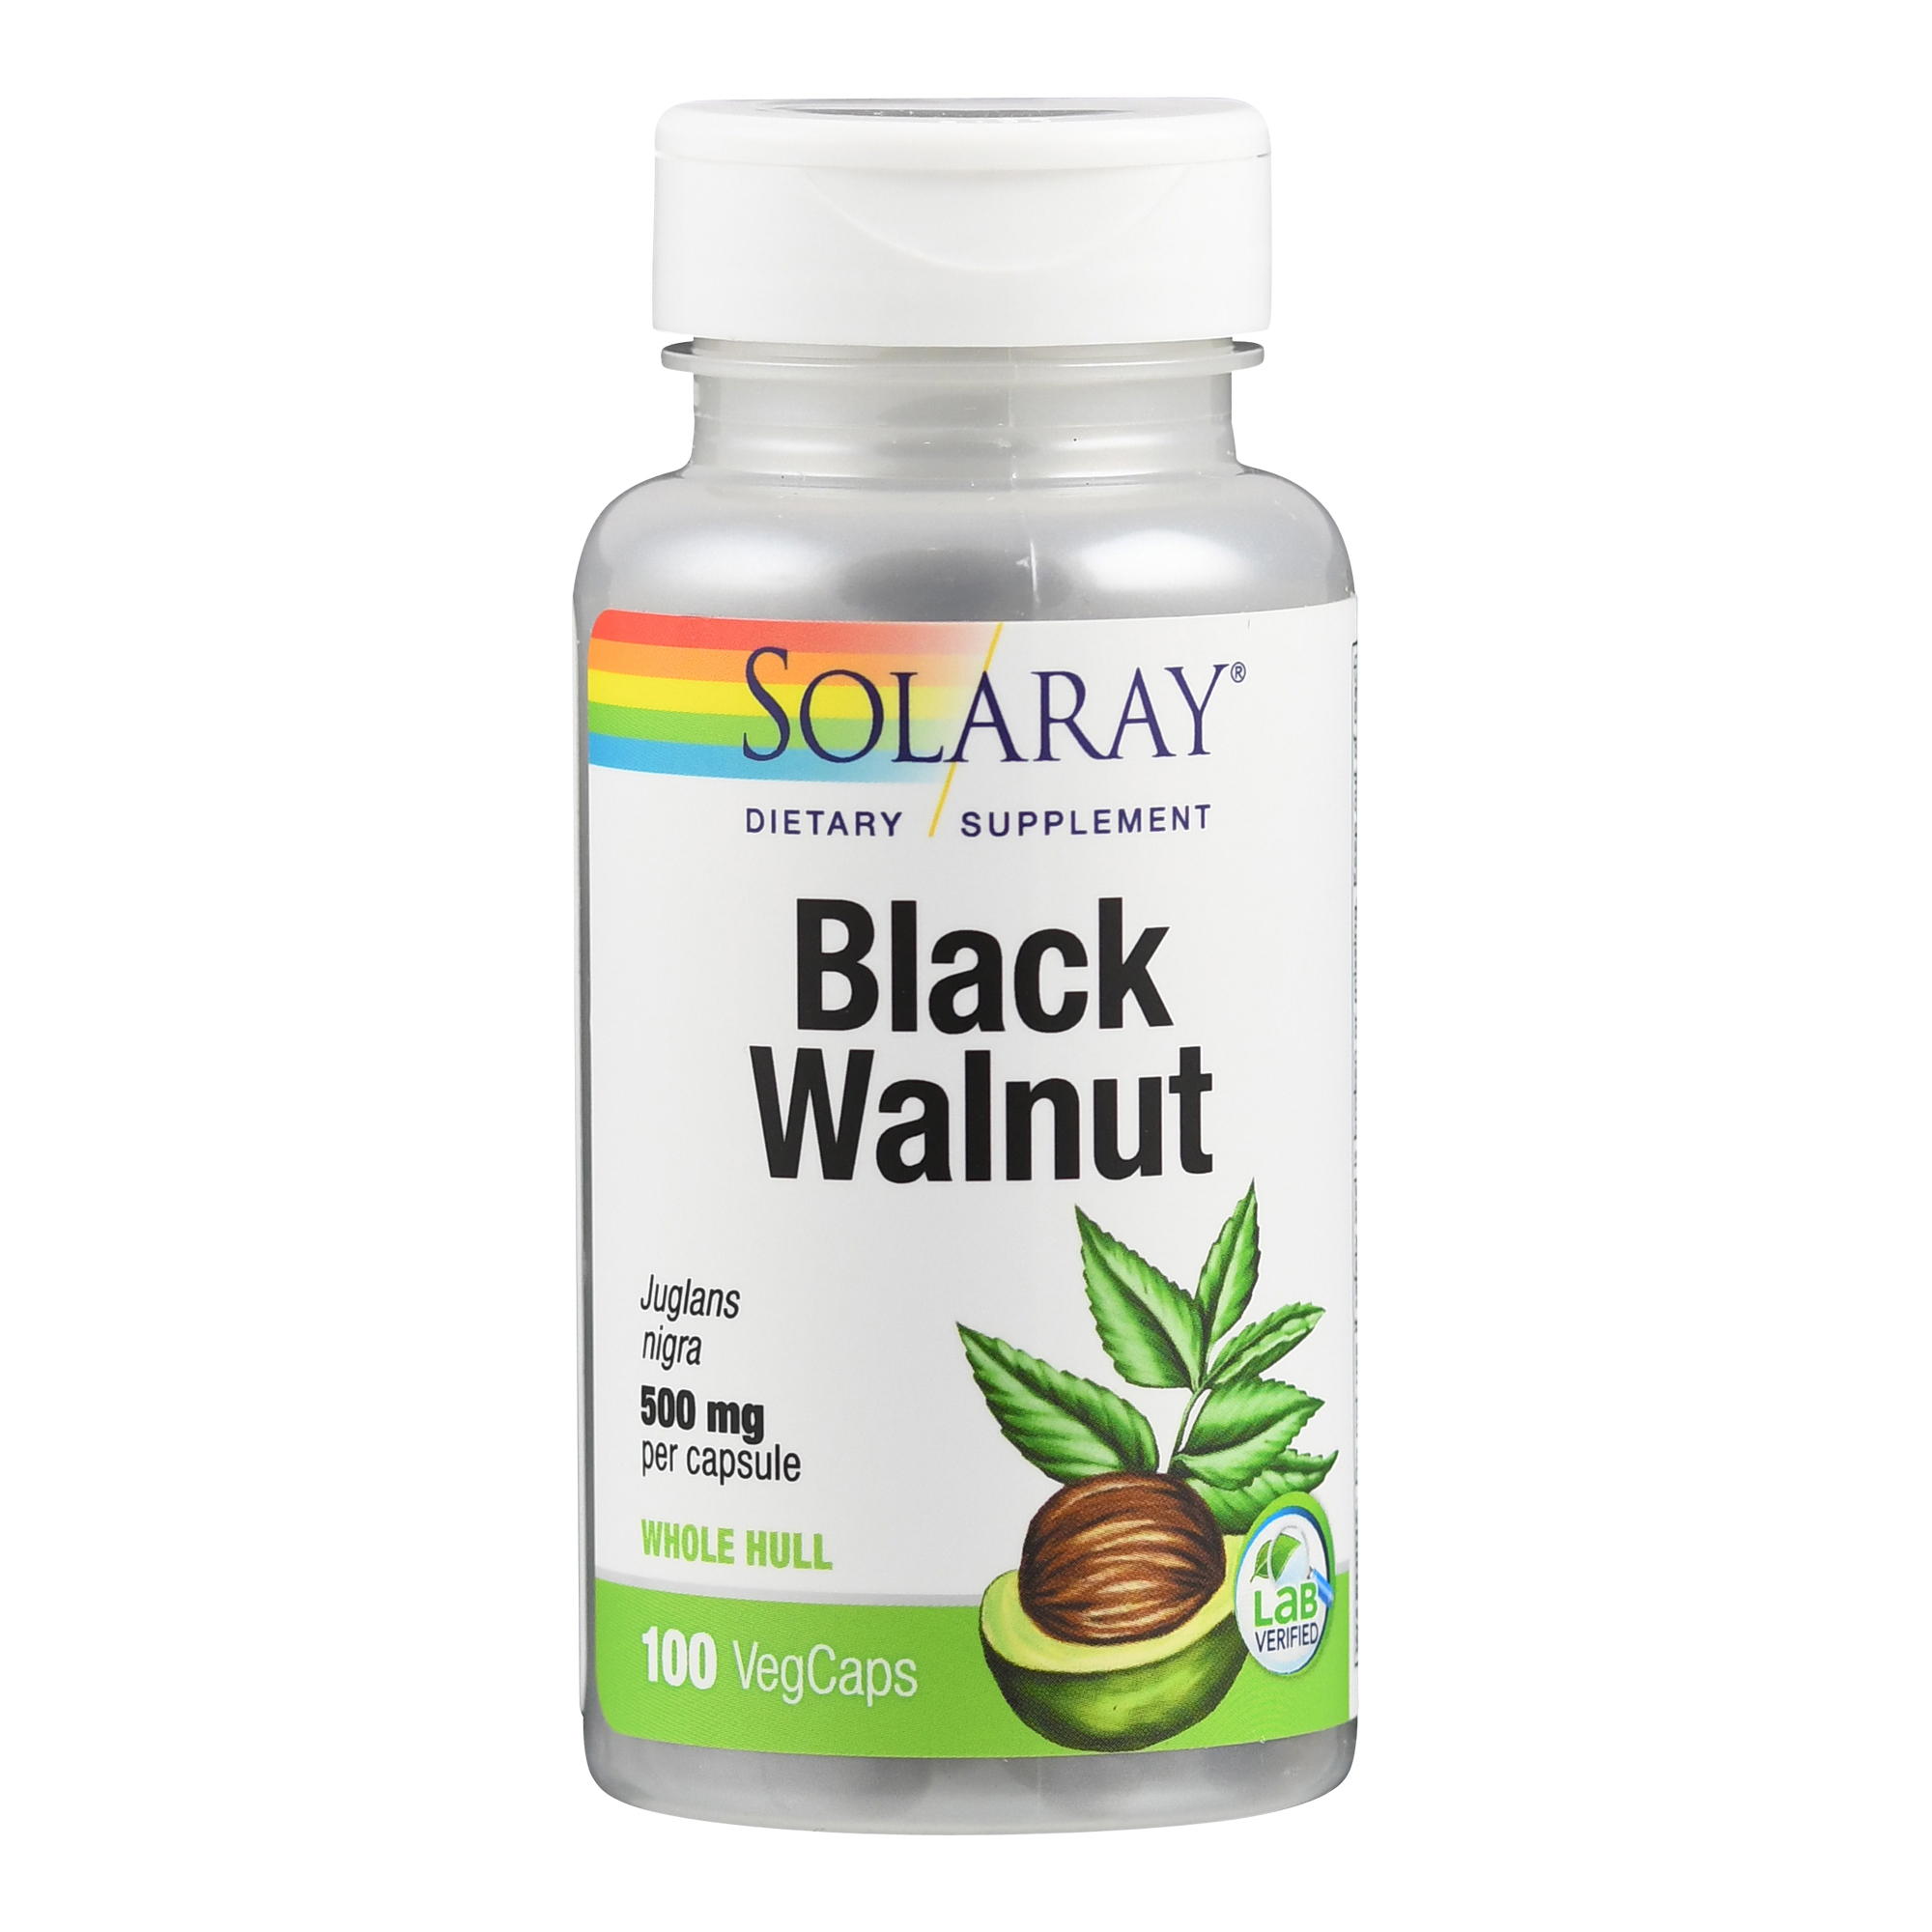 Schwarze Walnussschalen I vegan I laborgeprüft (Black Walnut Hull) von Solaray.